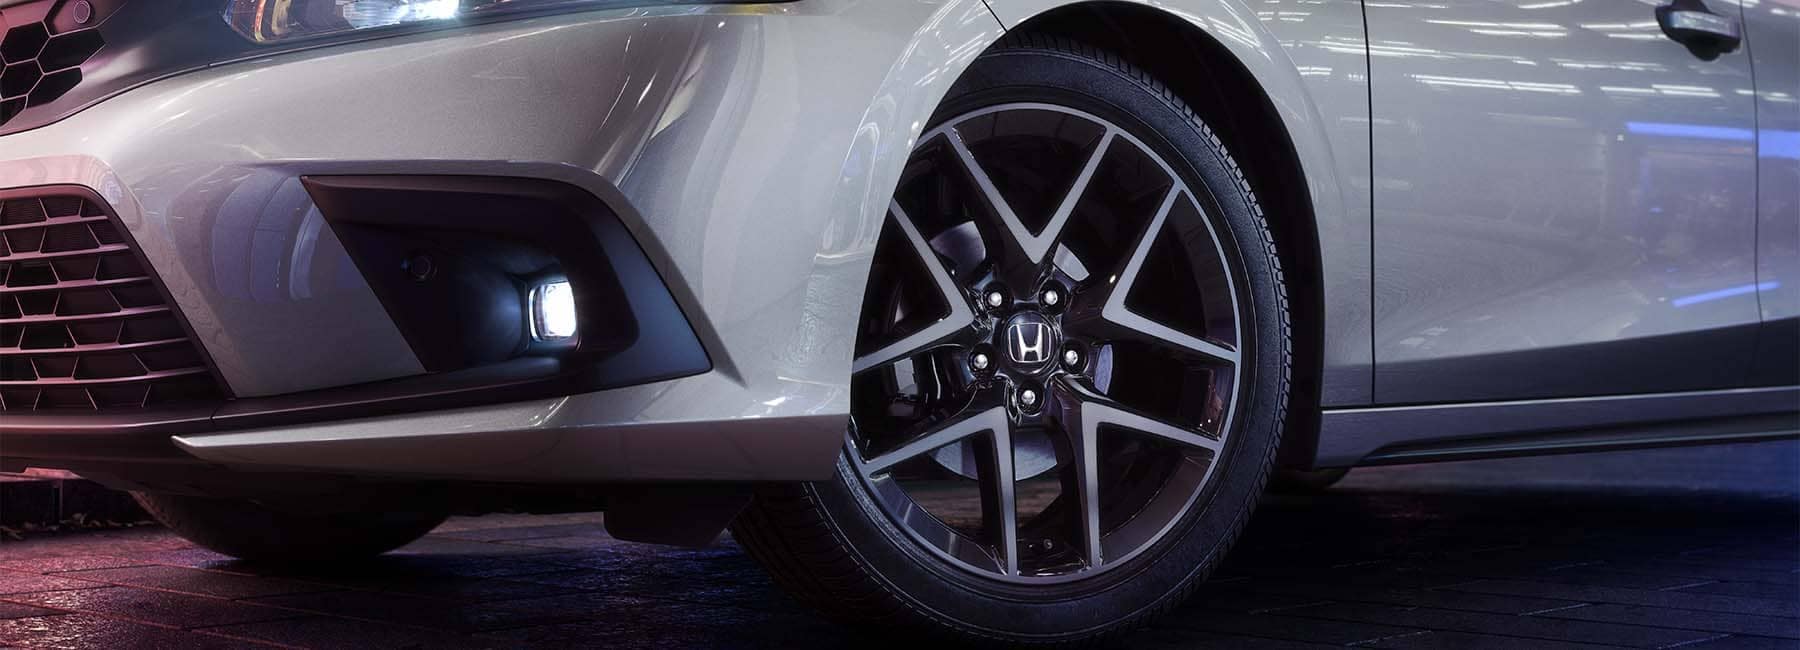 Closeup of a white 2022 Honda Civic wheel